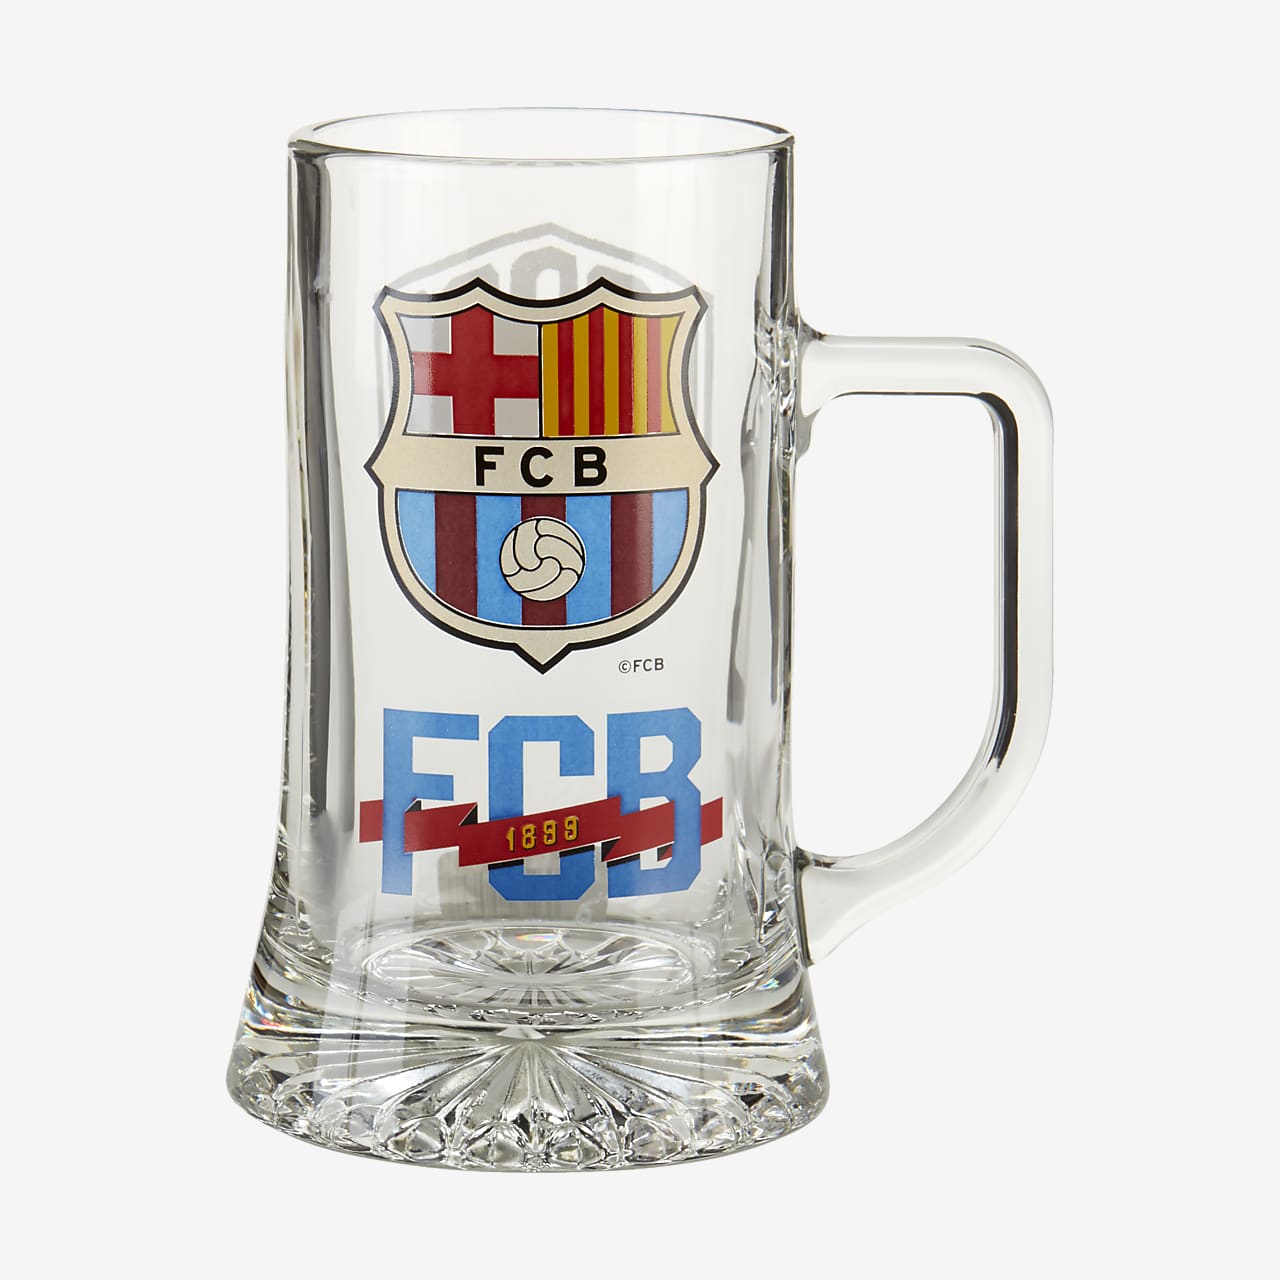 Chope FC Barcelona 1899 Beer